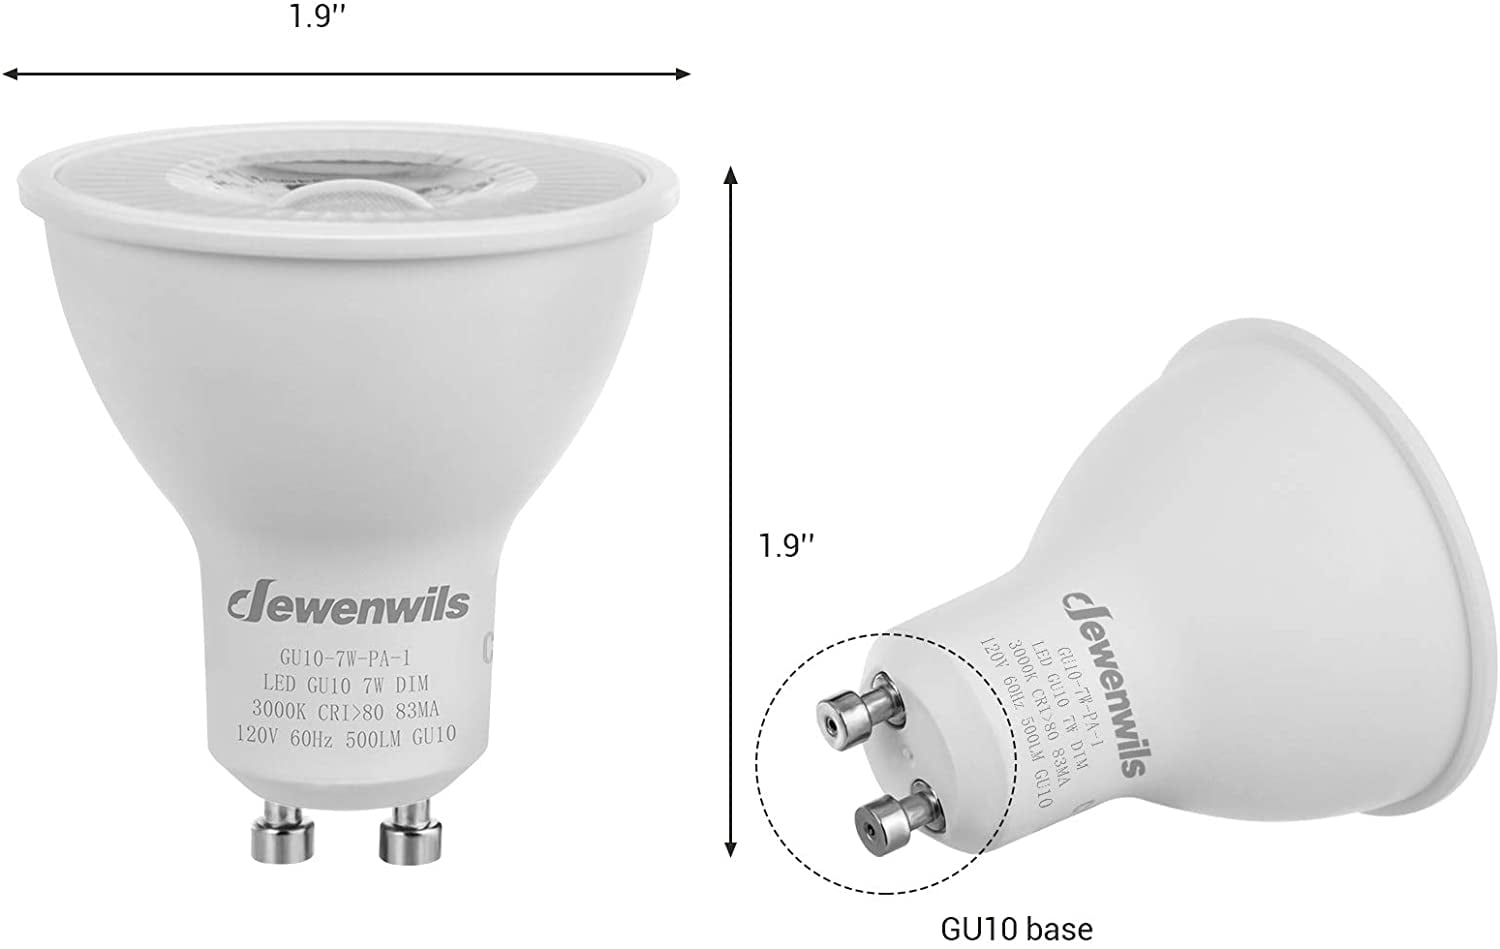 LED GU10 LED Bulb,Dimmable Track Lighting Bulbs,500LM,3000K Warm White,7W Equivalent),UL Listed,10-Pack - Walmart.com